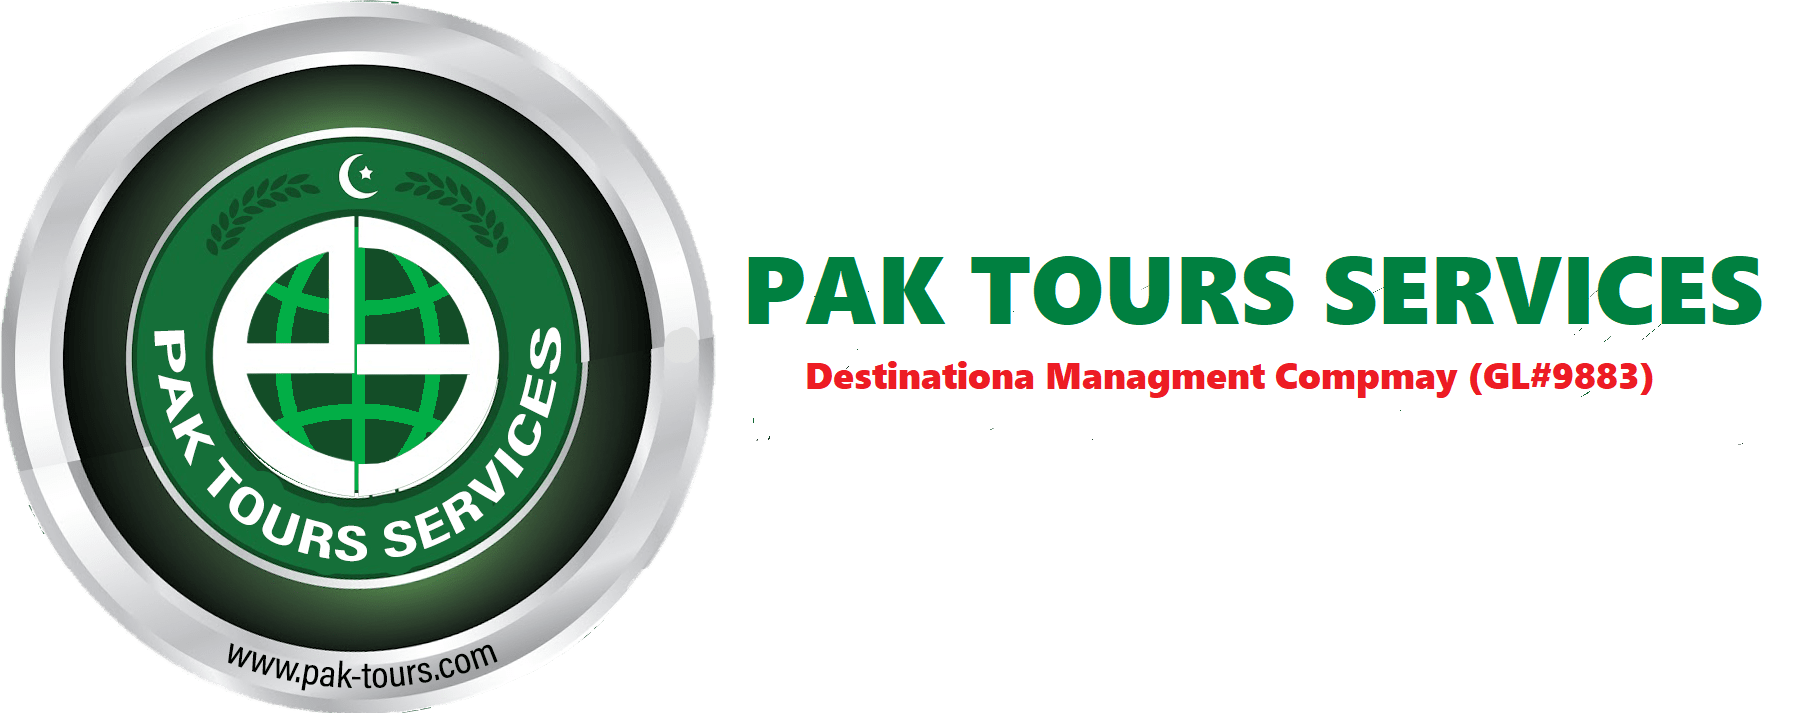 Your Trusted Travel Partner | Tajikistan Visa - Your Trusted Travel Partner